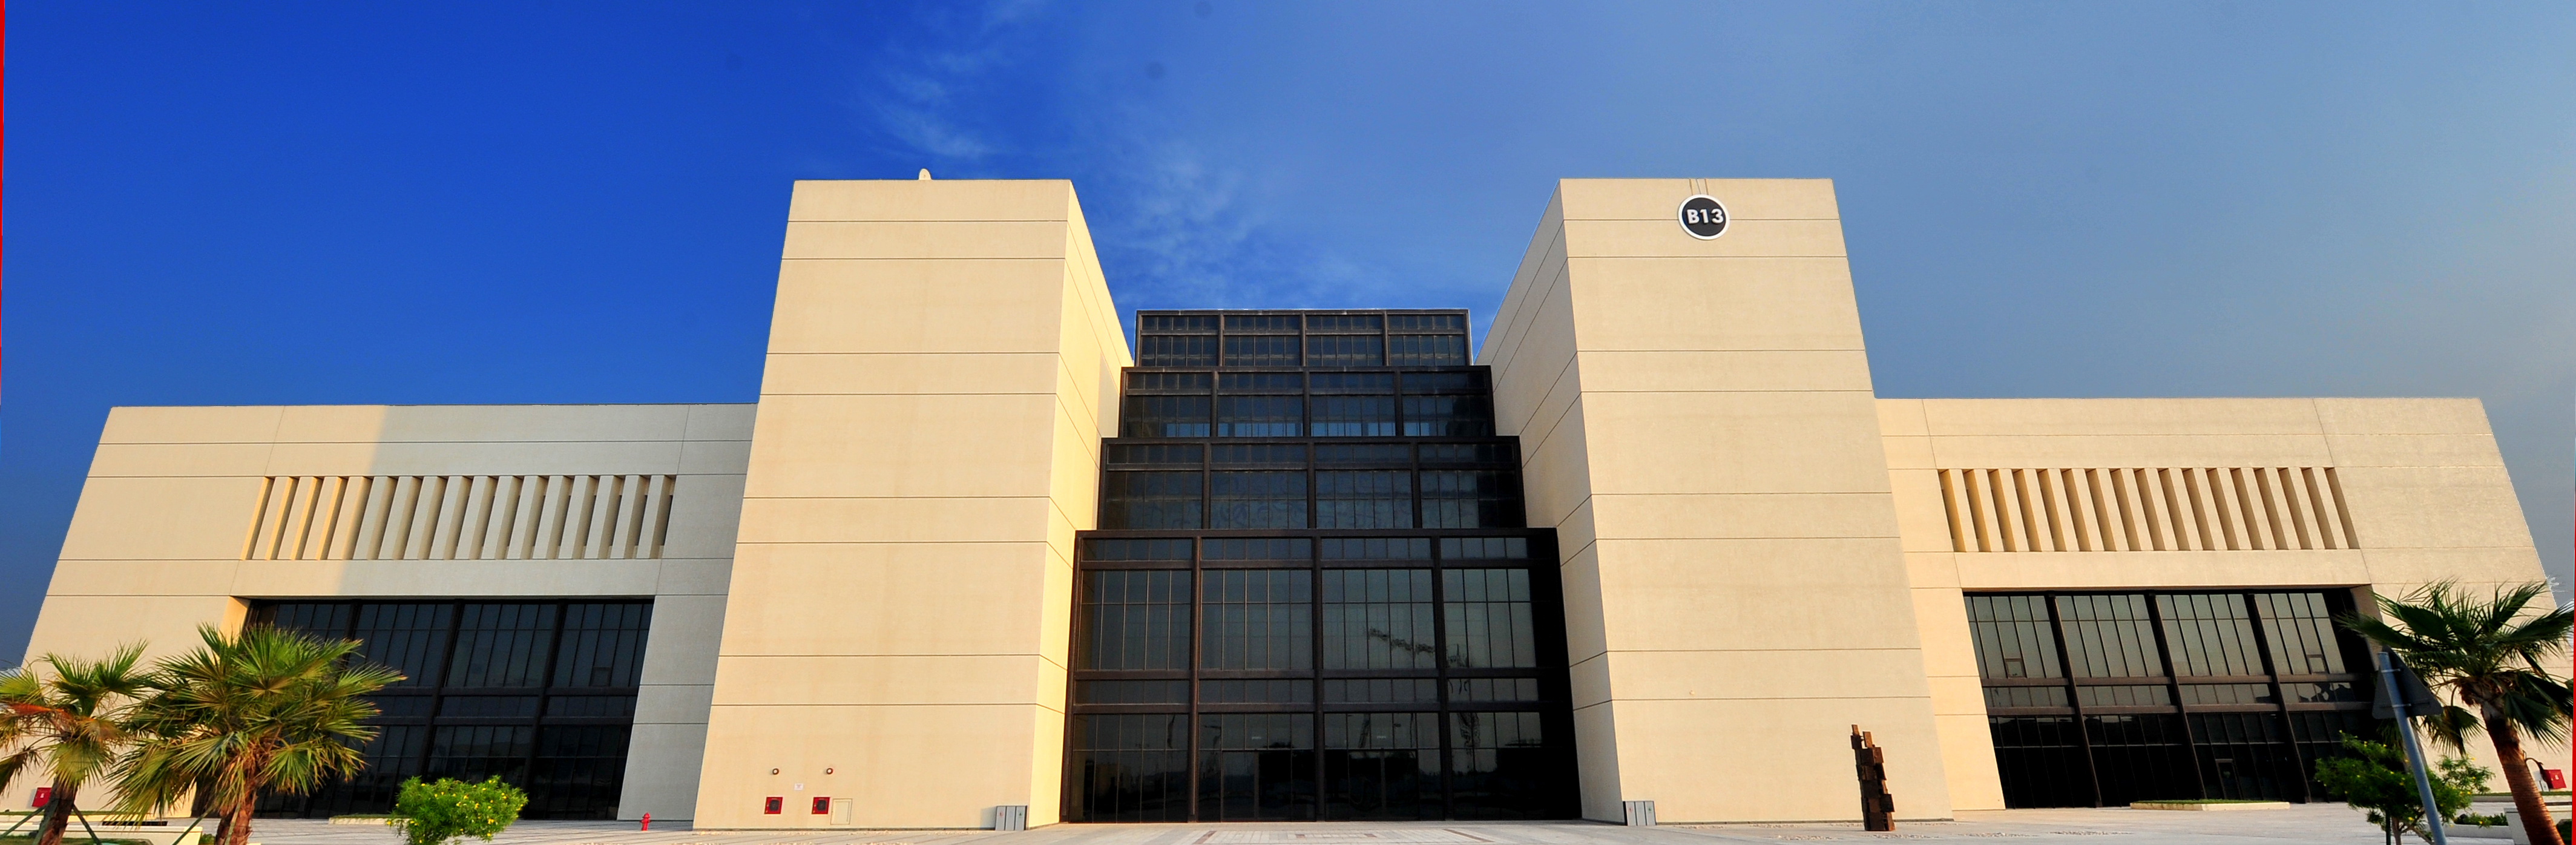 Qatar University Library Building